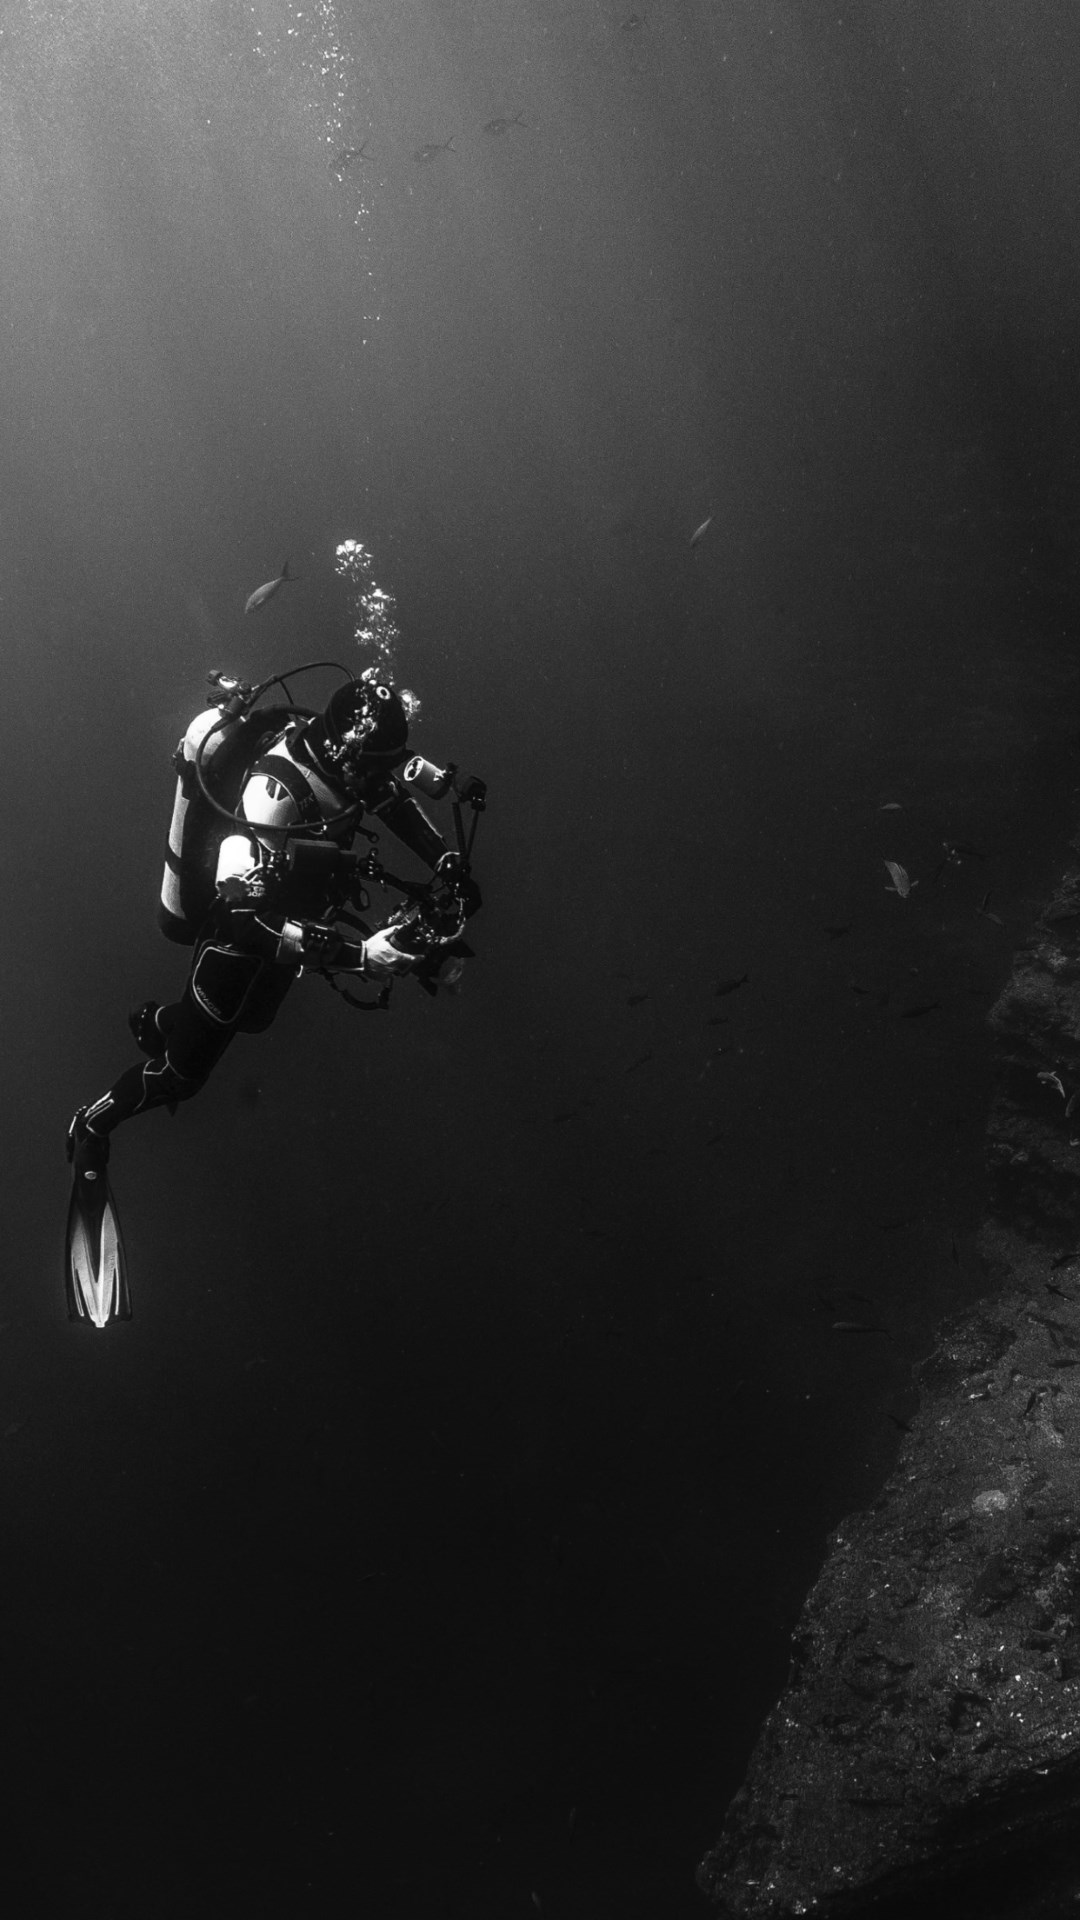 Download wallpaper: Diver in the Pacific Ocean 1080x1920